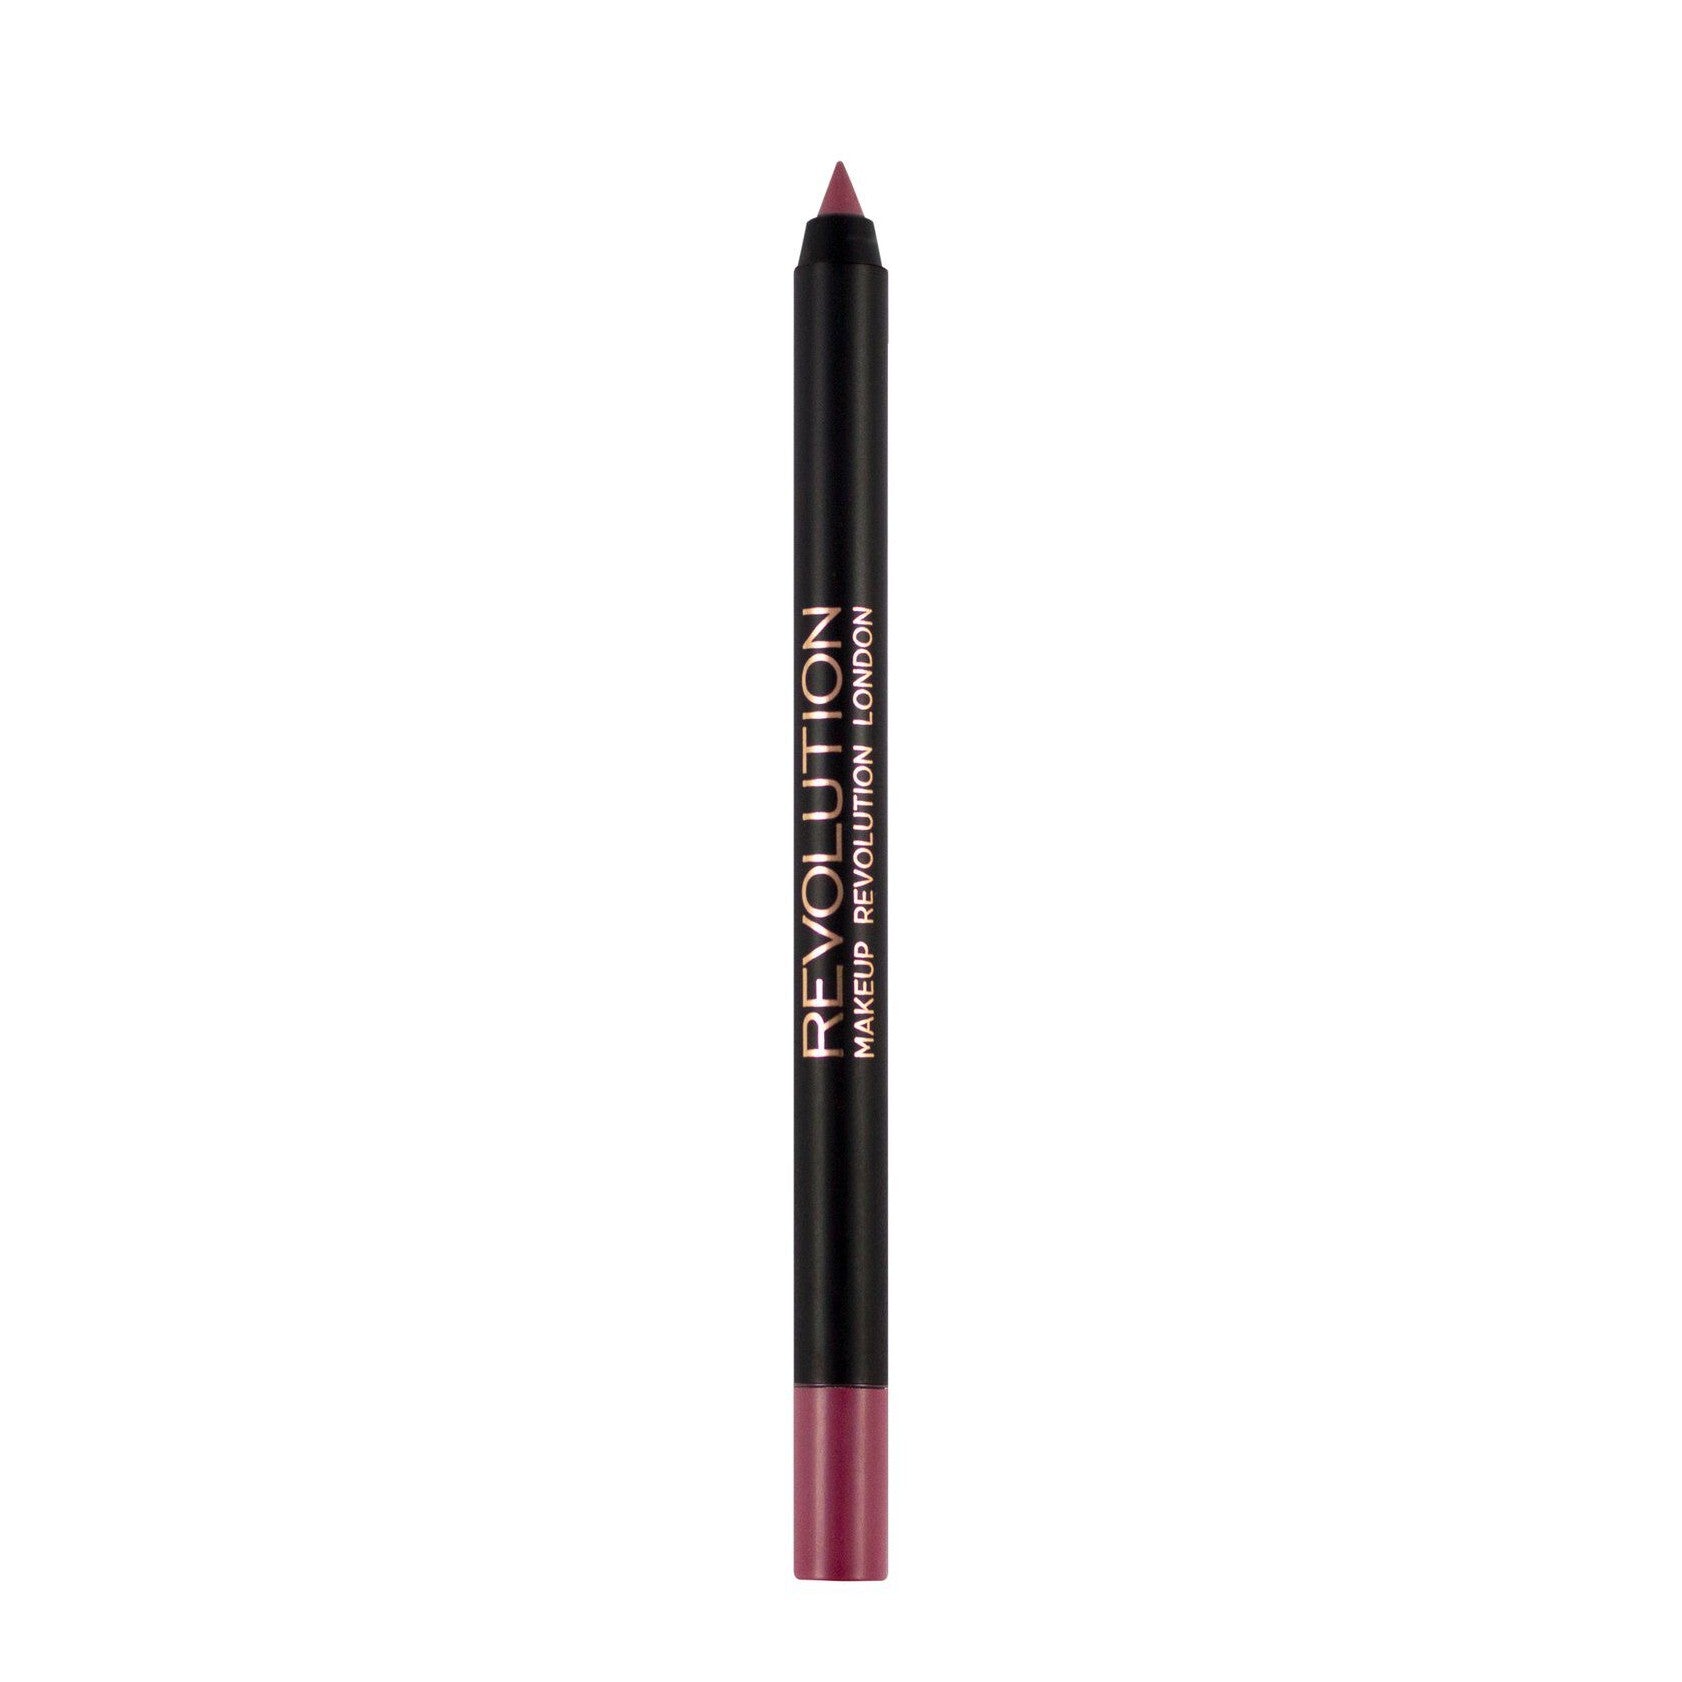 REVOLUTION Retro Luxe Lip Contour Kit - Pencil & Lipstick (Value Pack)